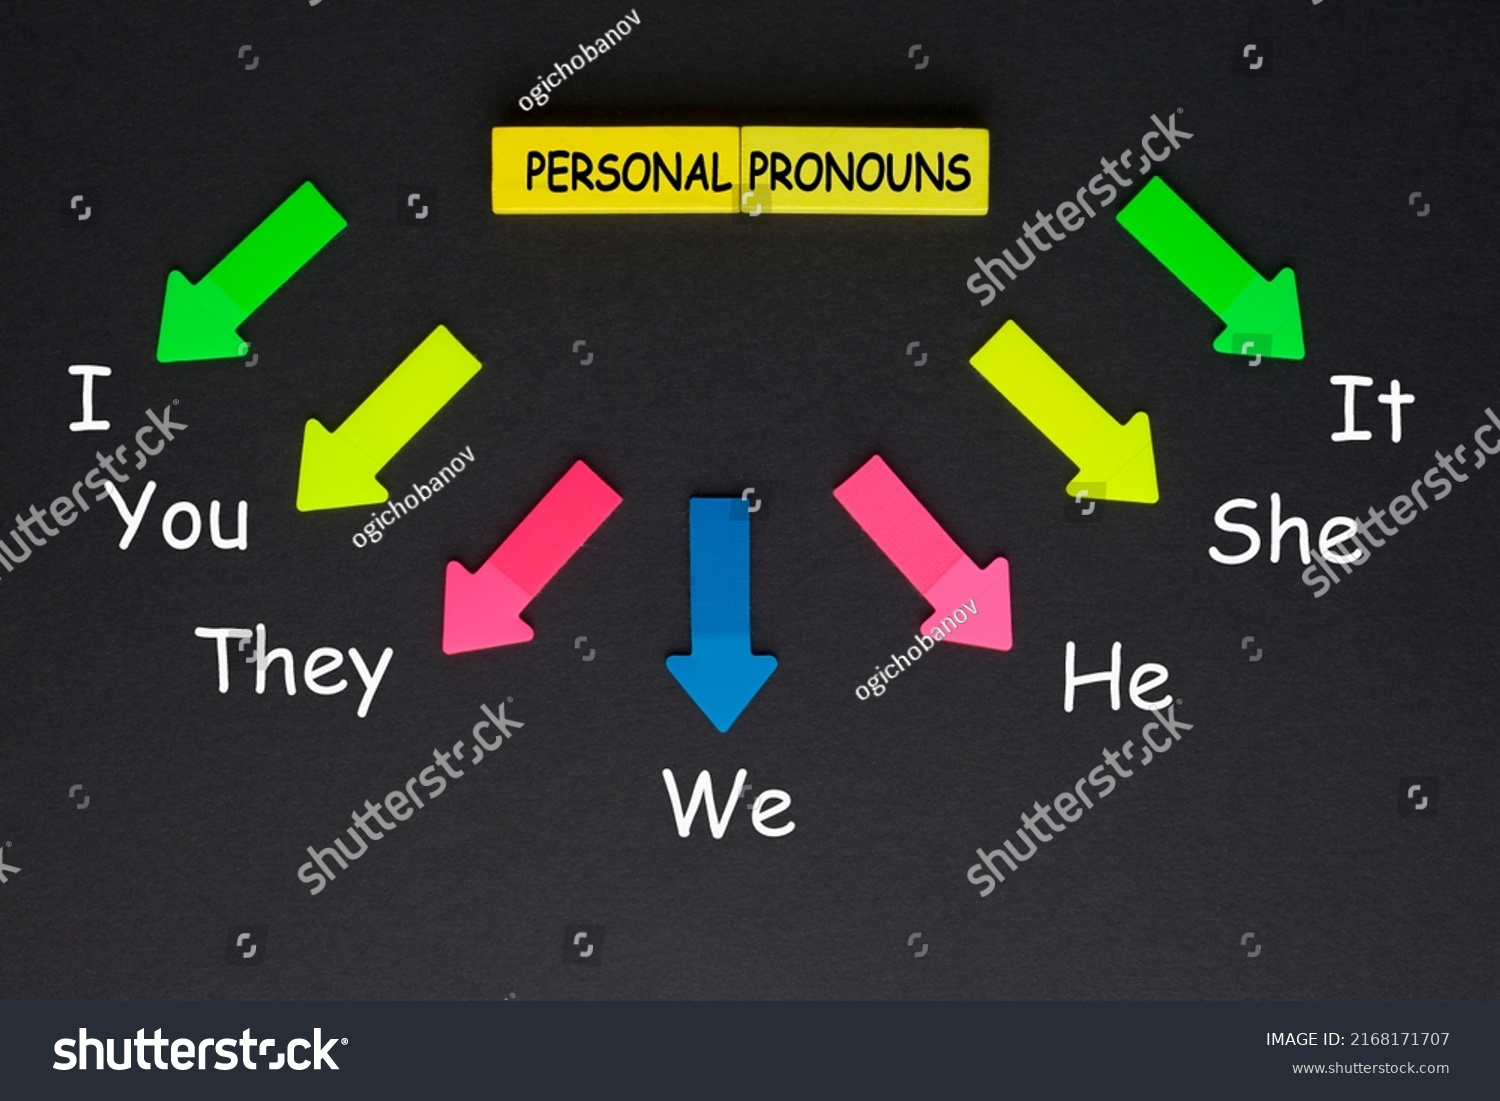 personal-pronouns-english-grammar-exercise-languages-stock-photo-2168171707-shutterstock